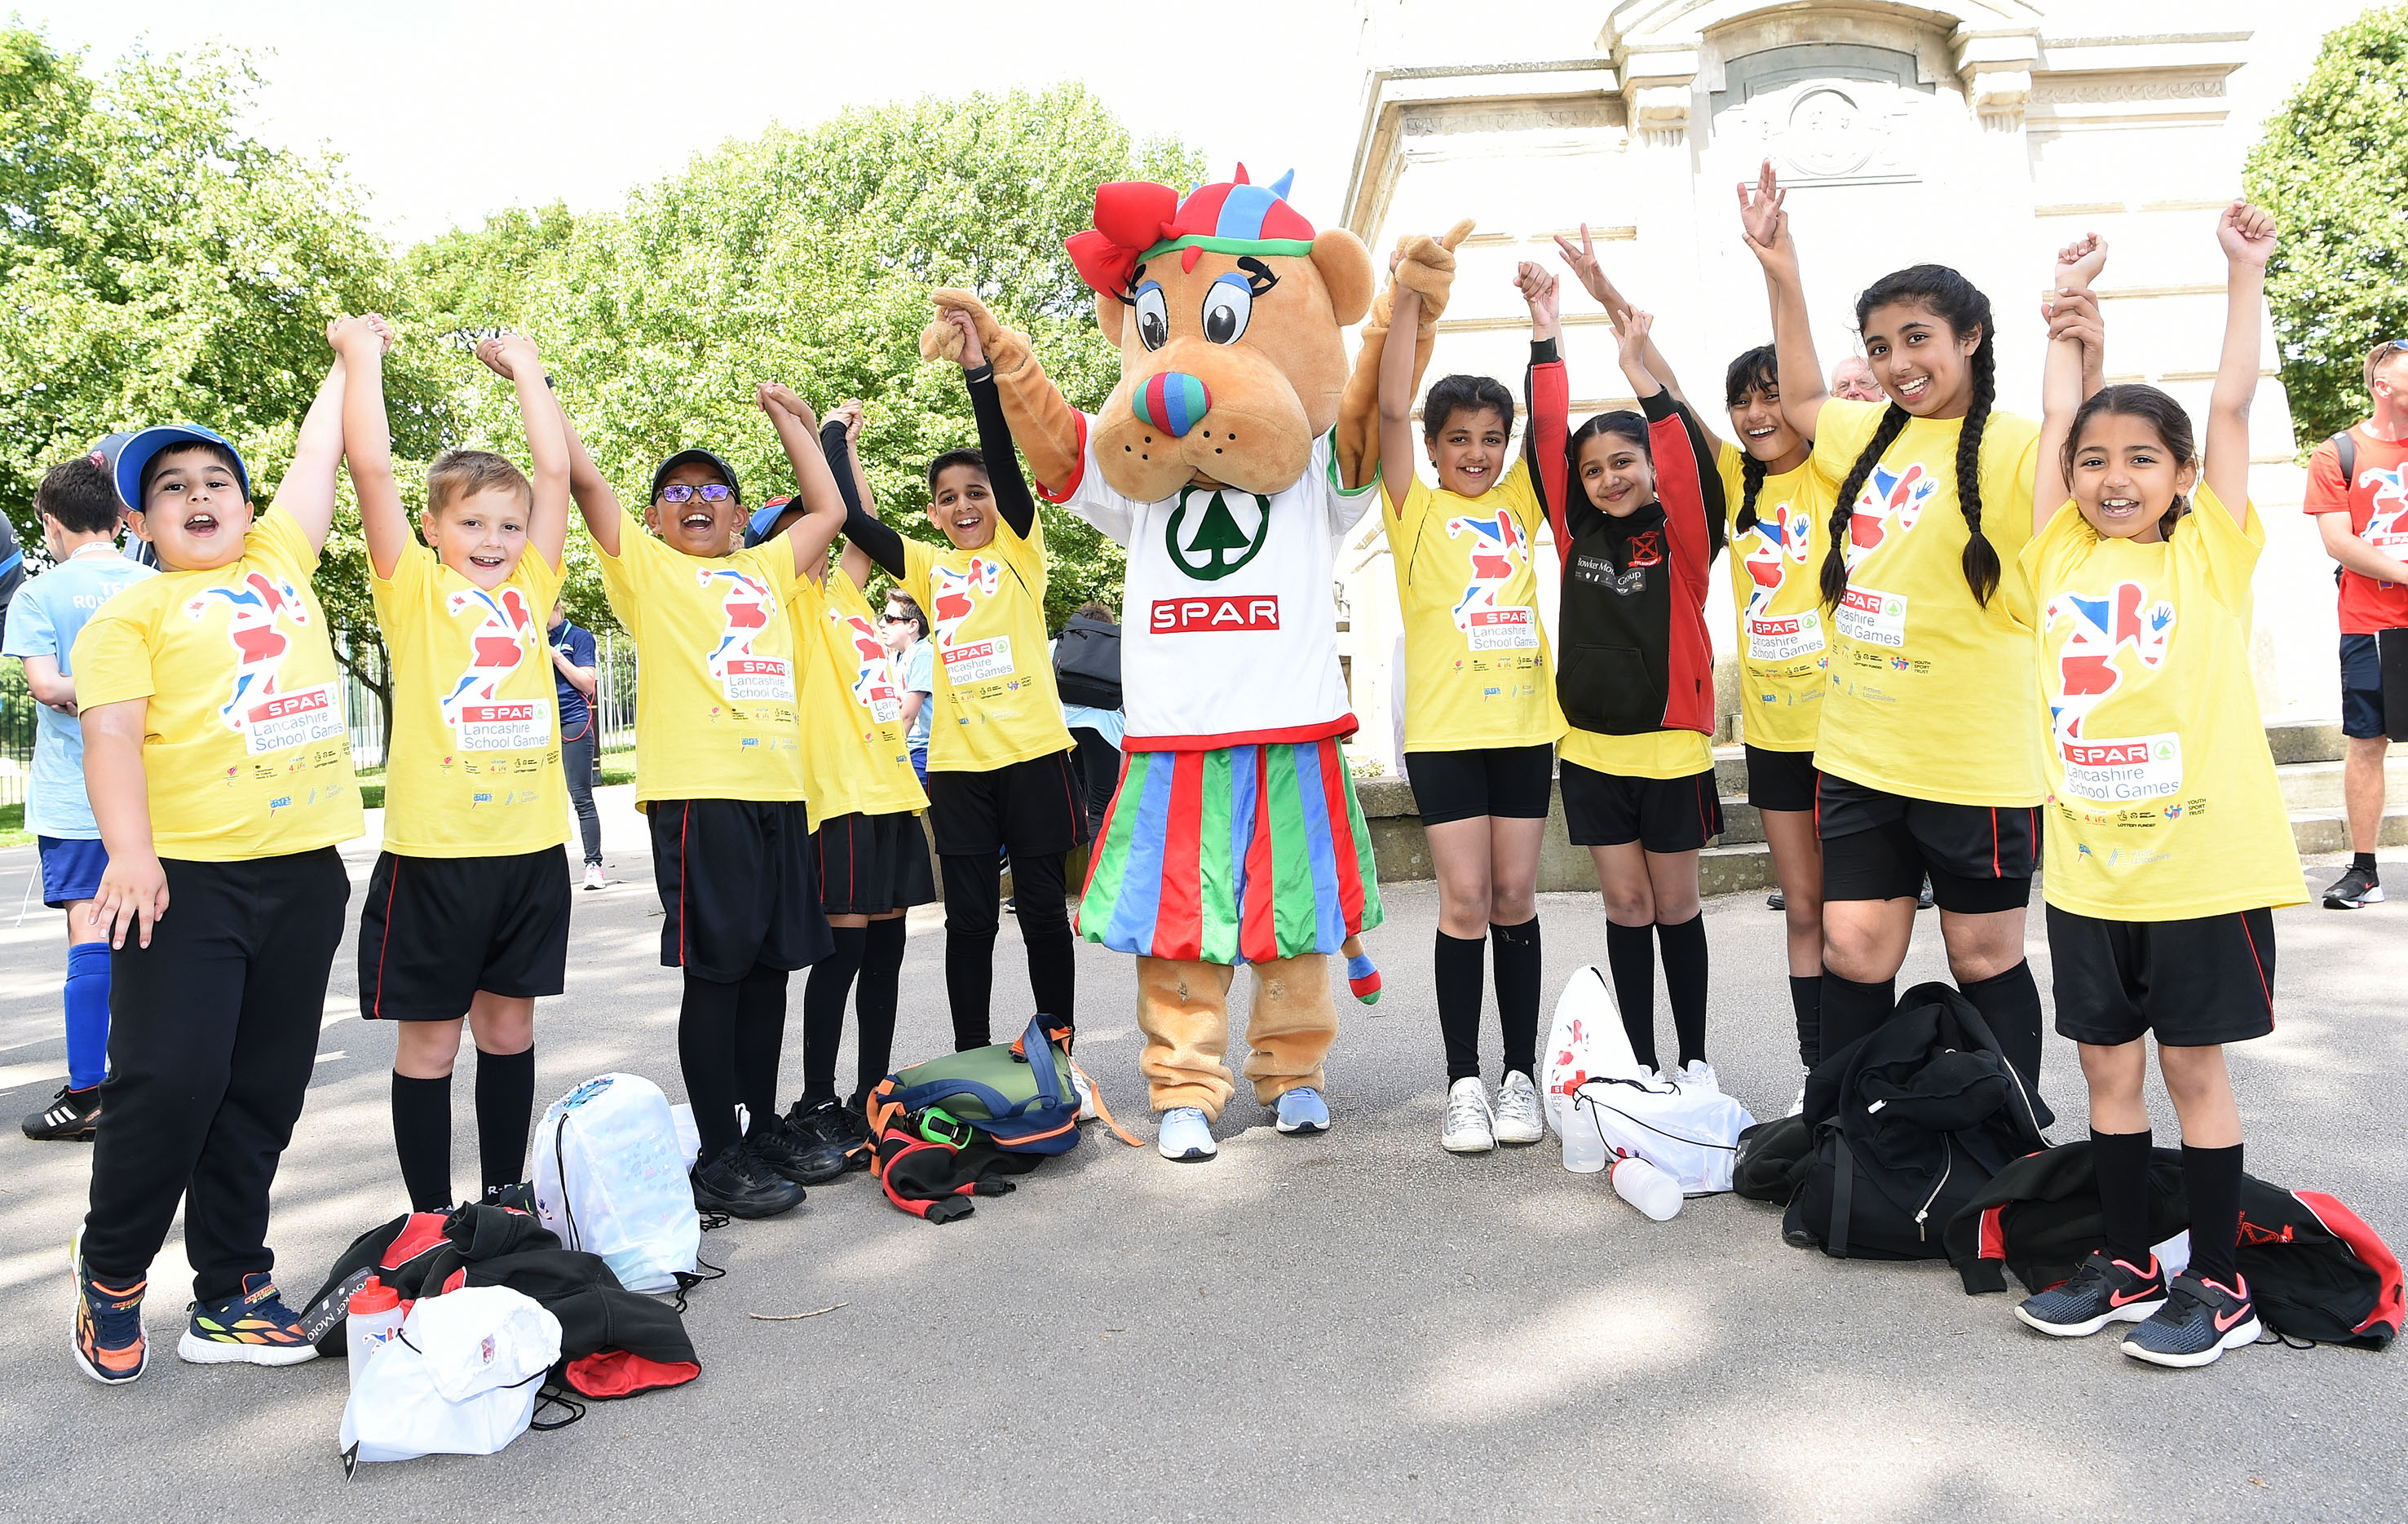 Lancashire School Games - SPAR mascot and children